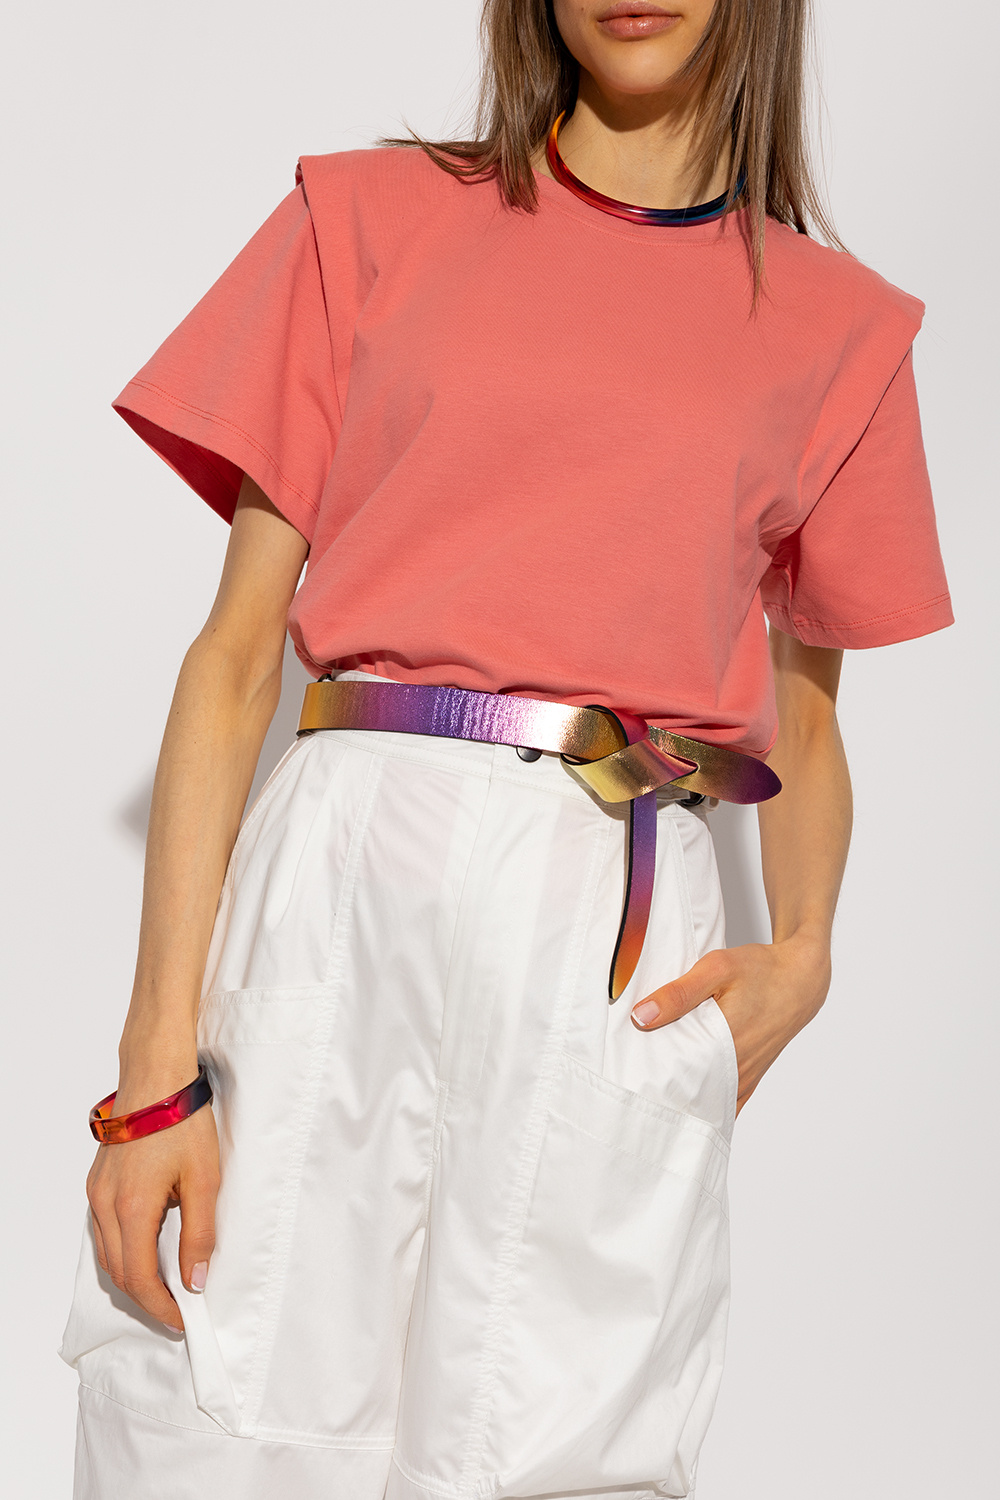 Isabel Marant Lecce Belt: 4 Outfits